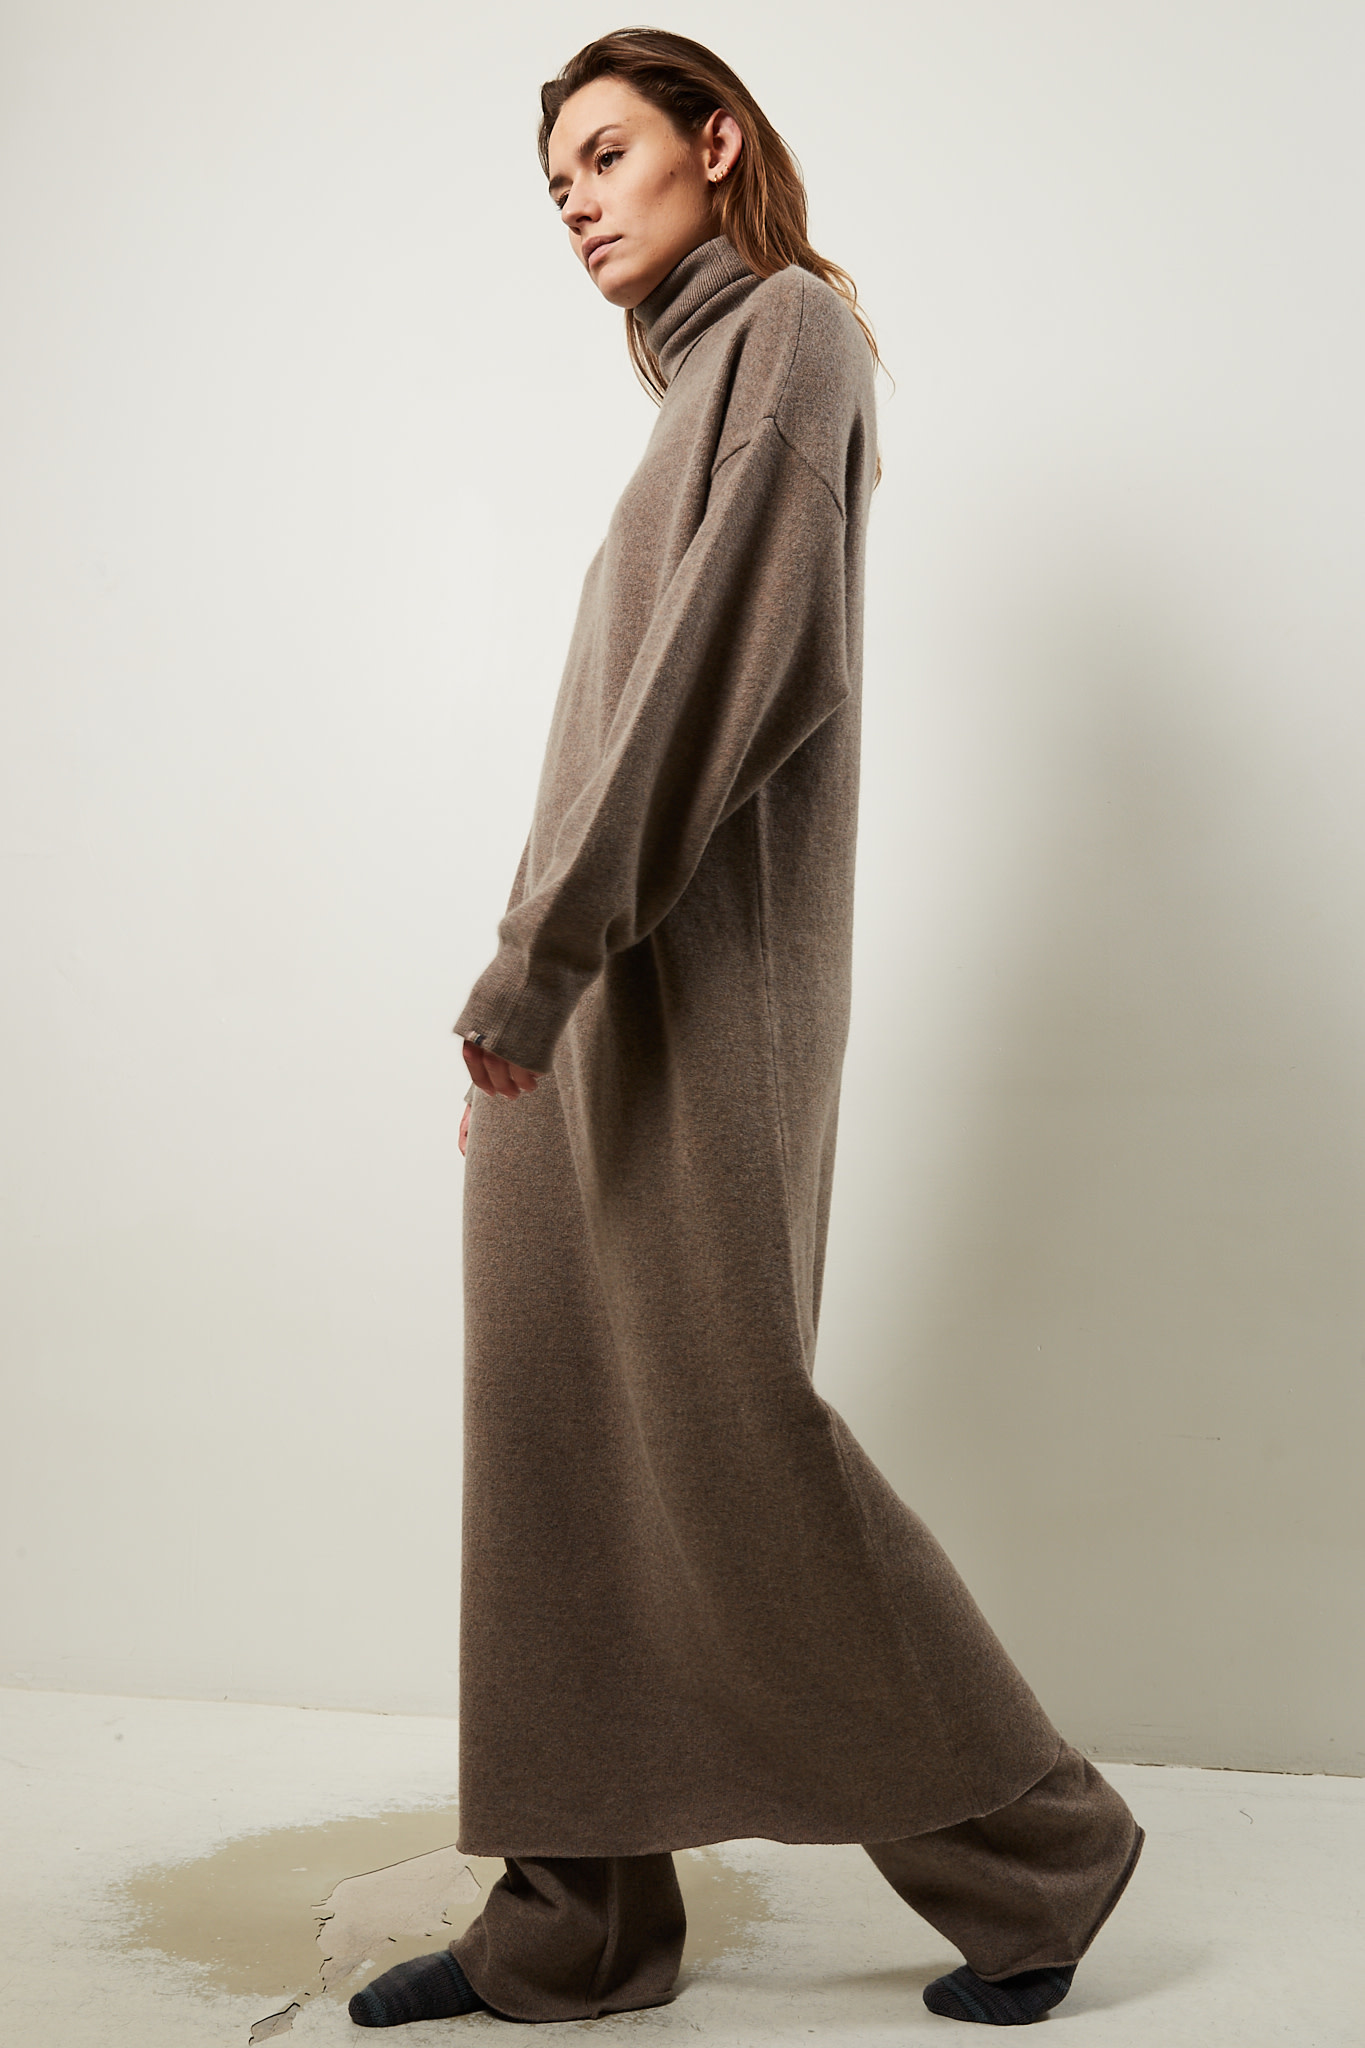 extreme cashmere - Attraction cashmere dress